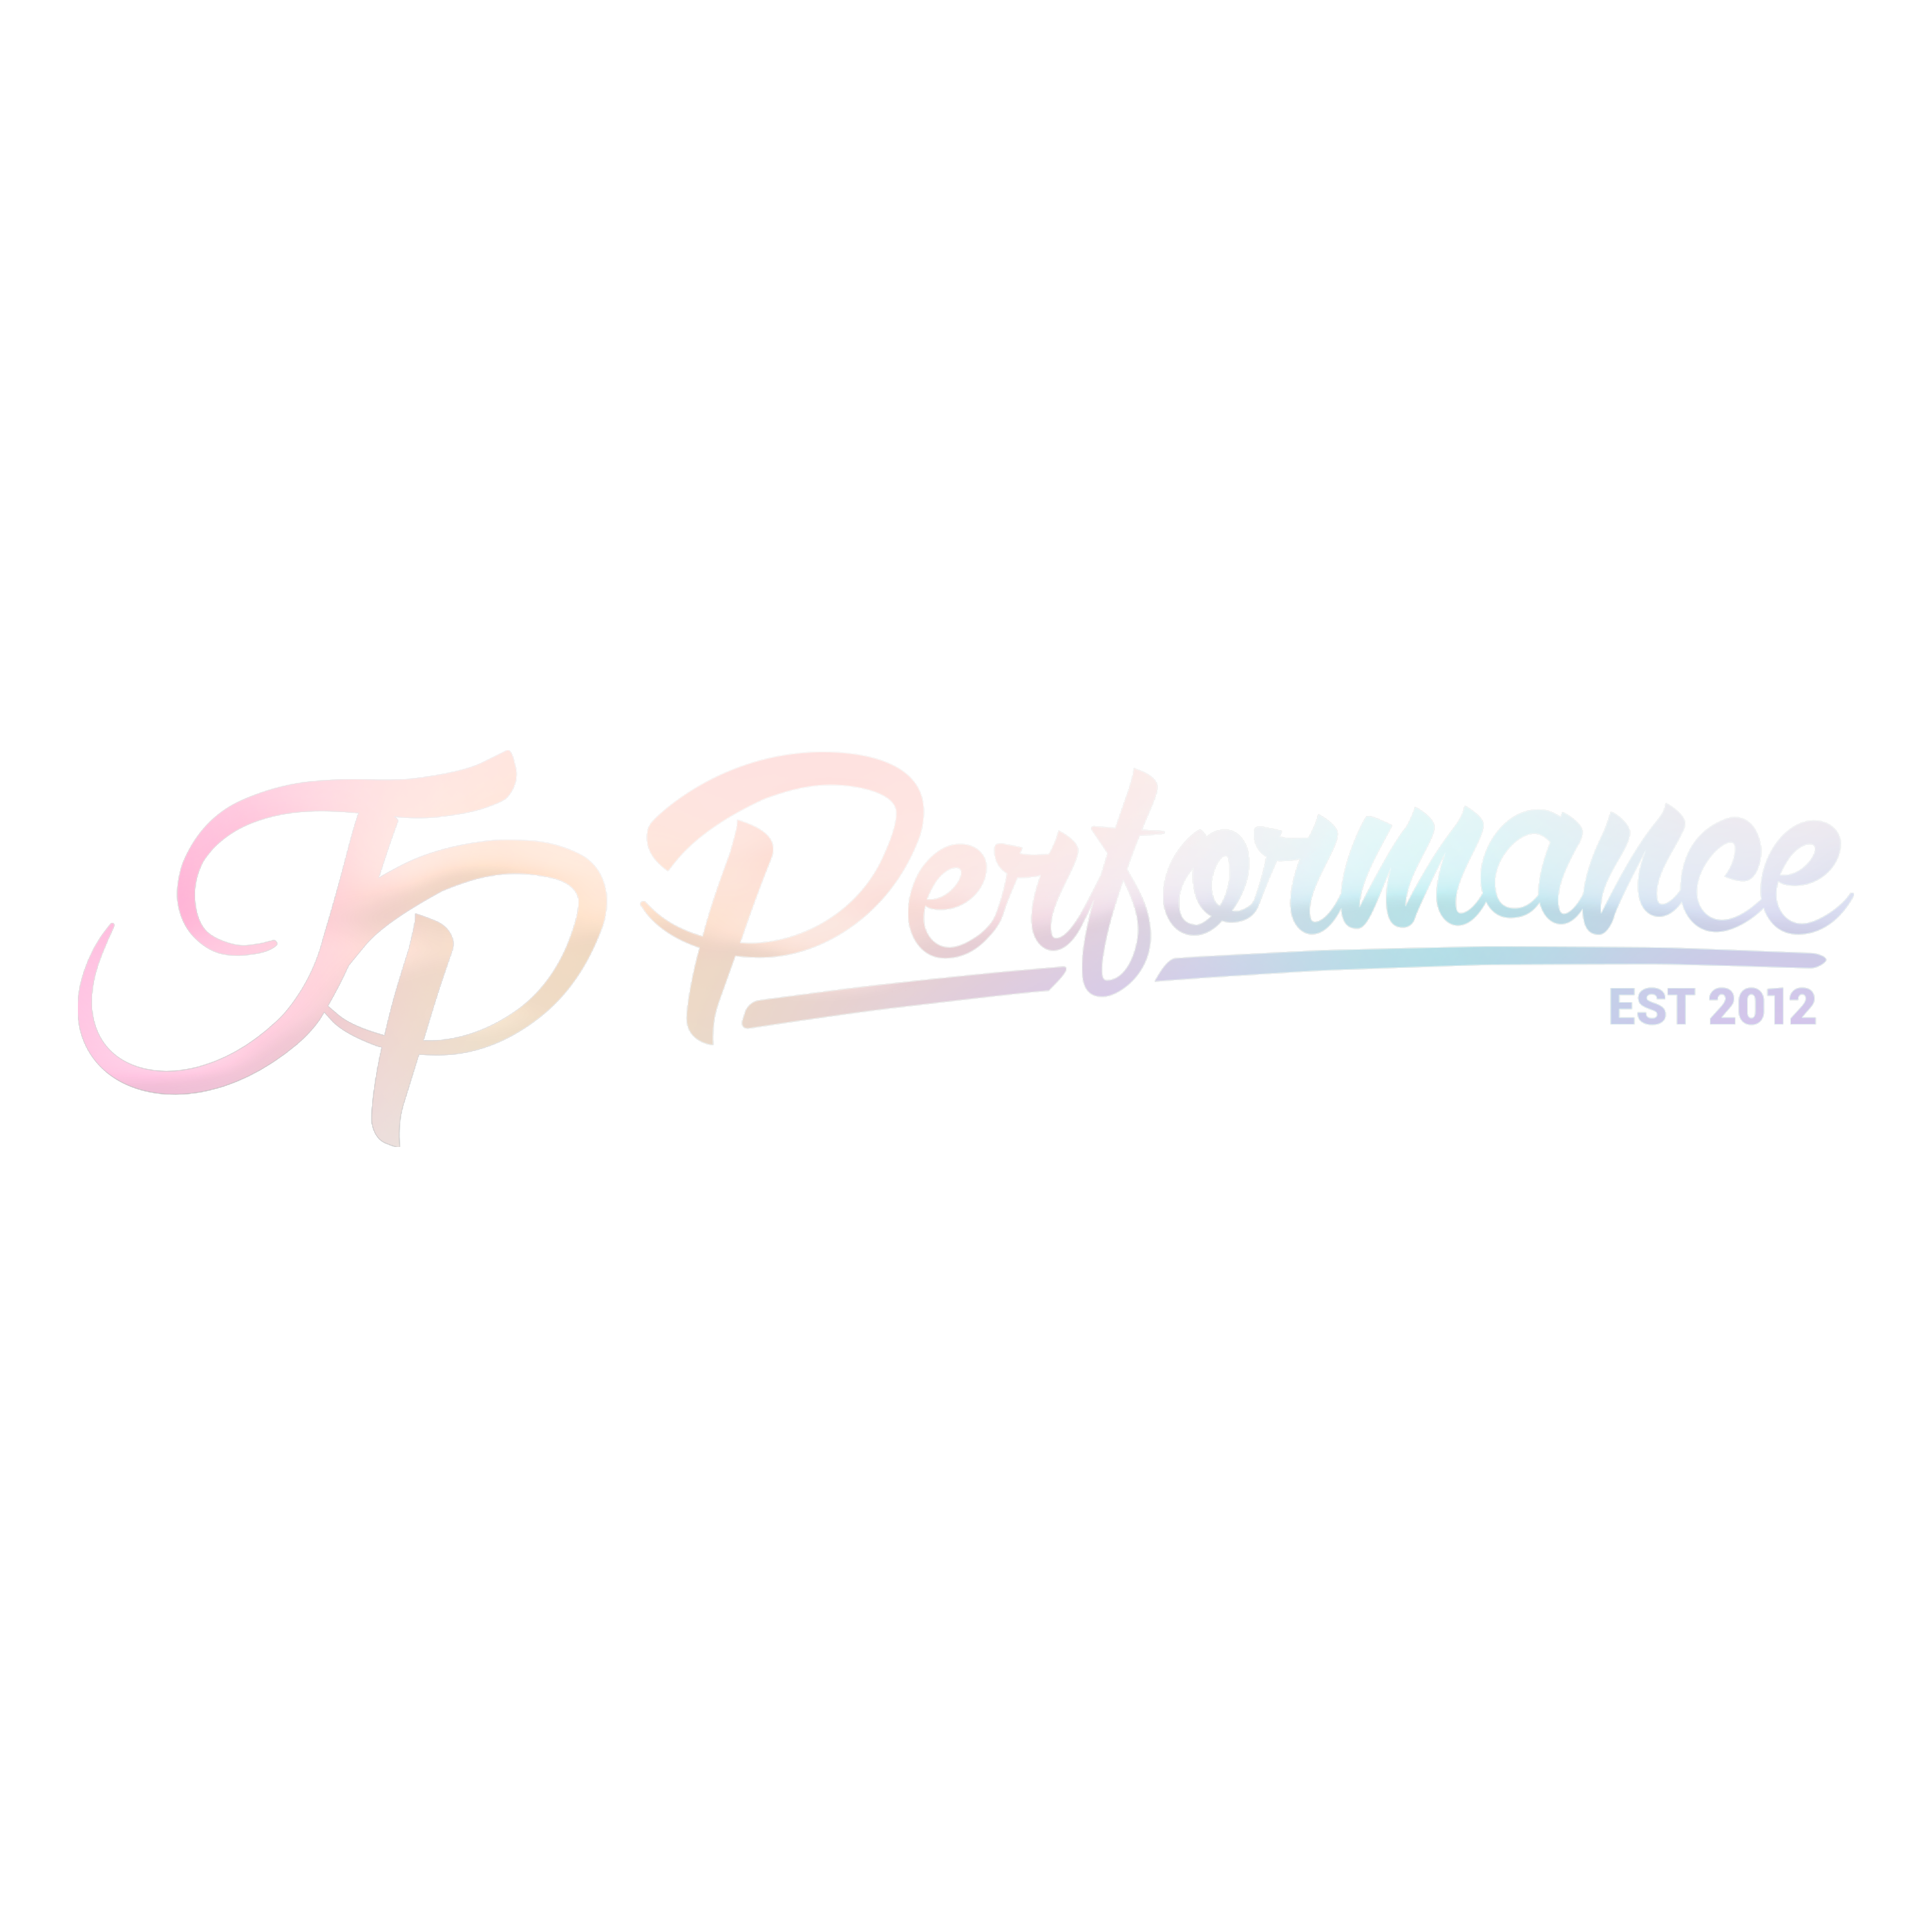 Sticker "JP Performance" BIG